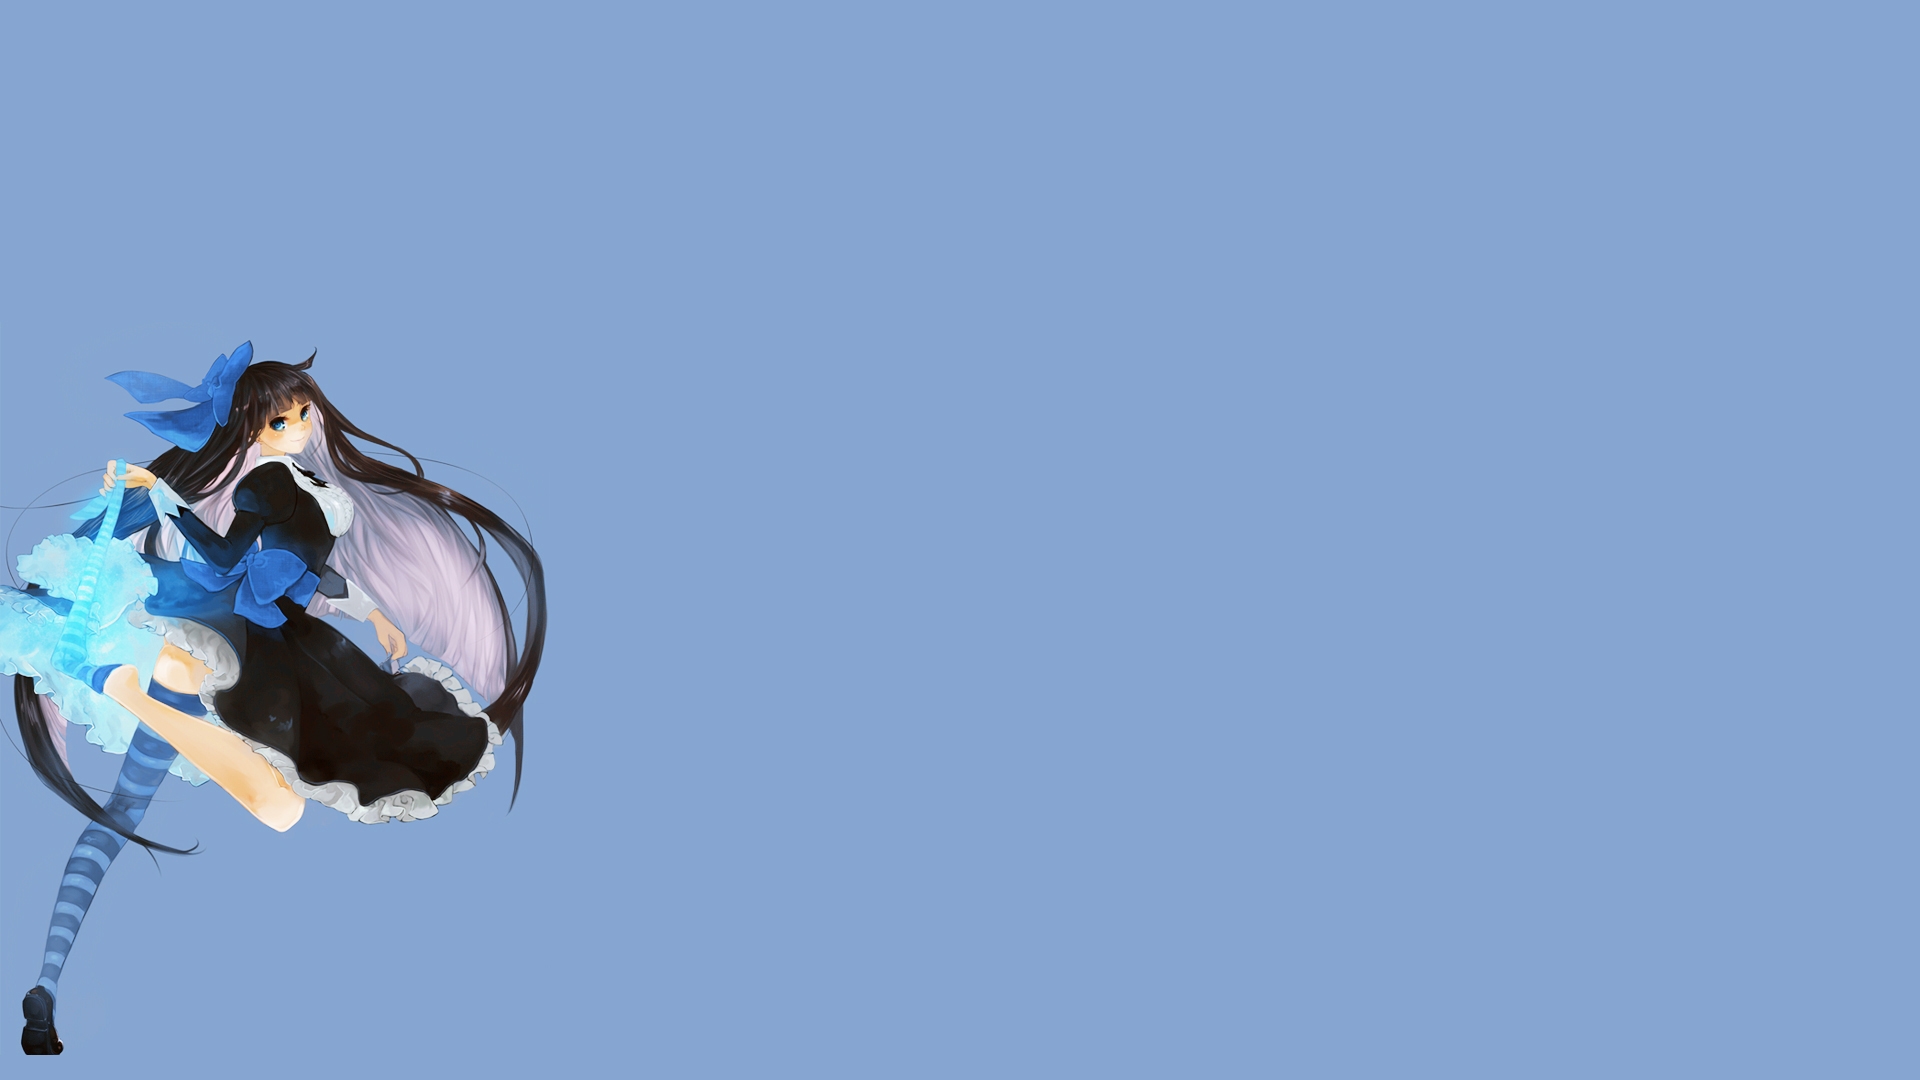 Panty and Stocking with Garterbelt, простой фон, Анархия чулок, полосатые носки - обои на рабочий стол